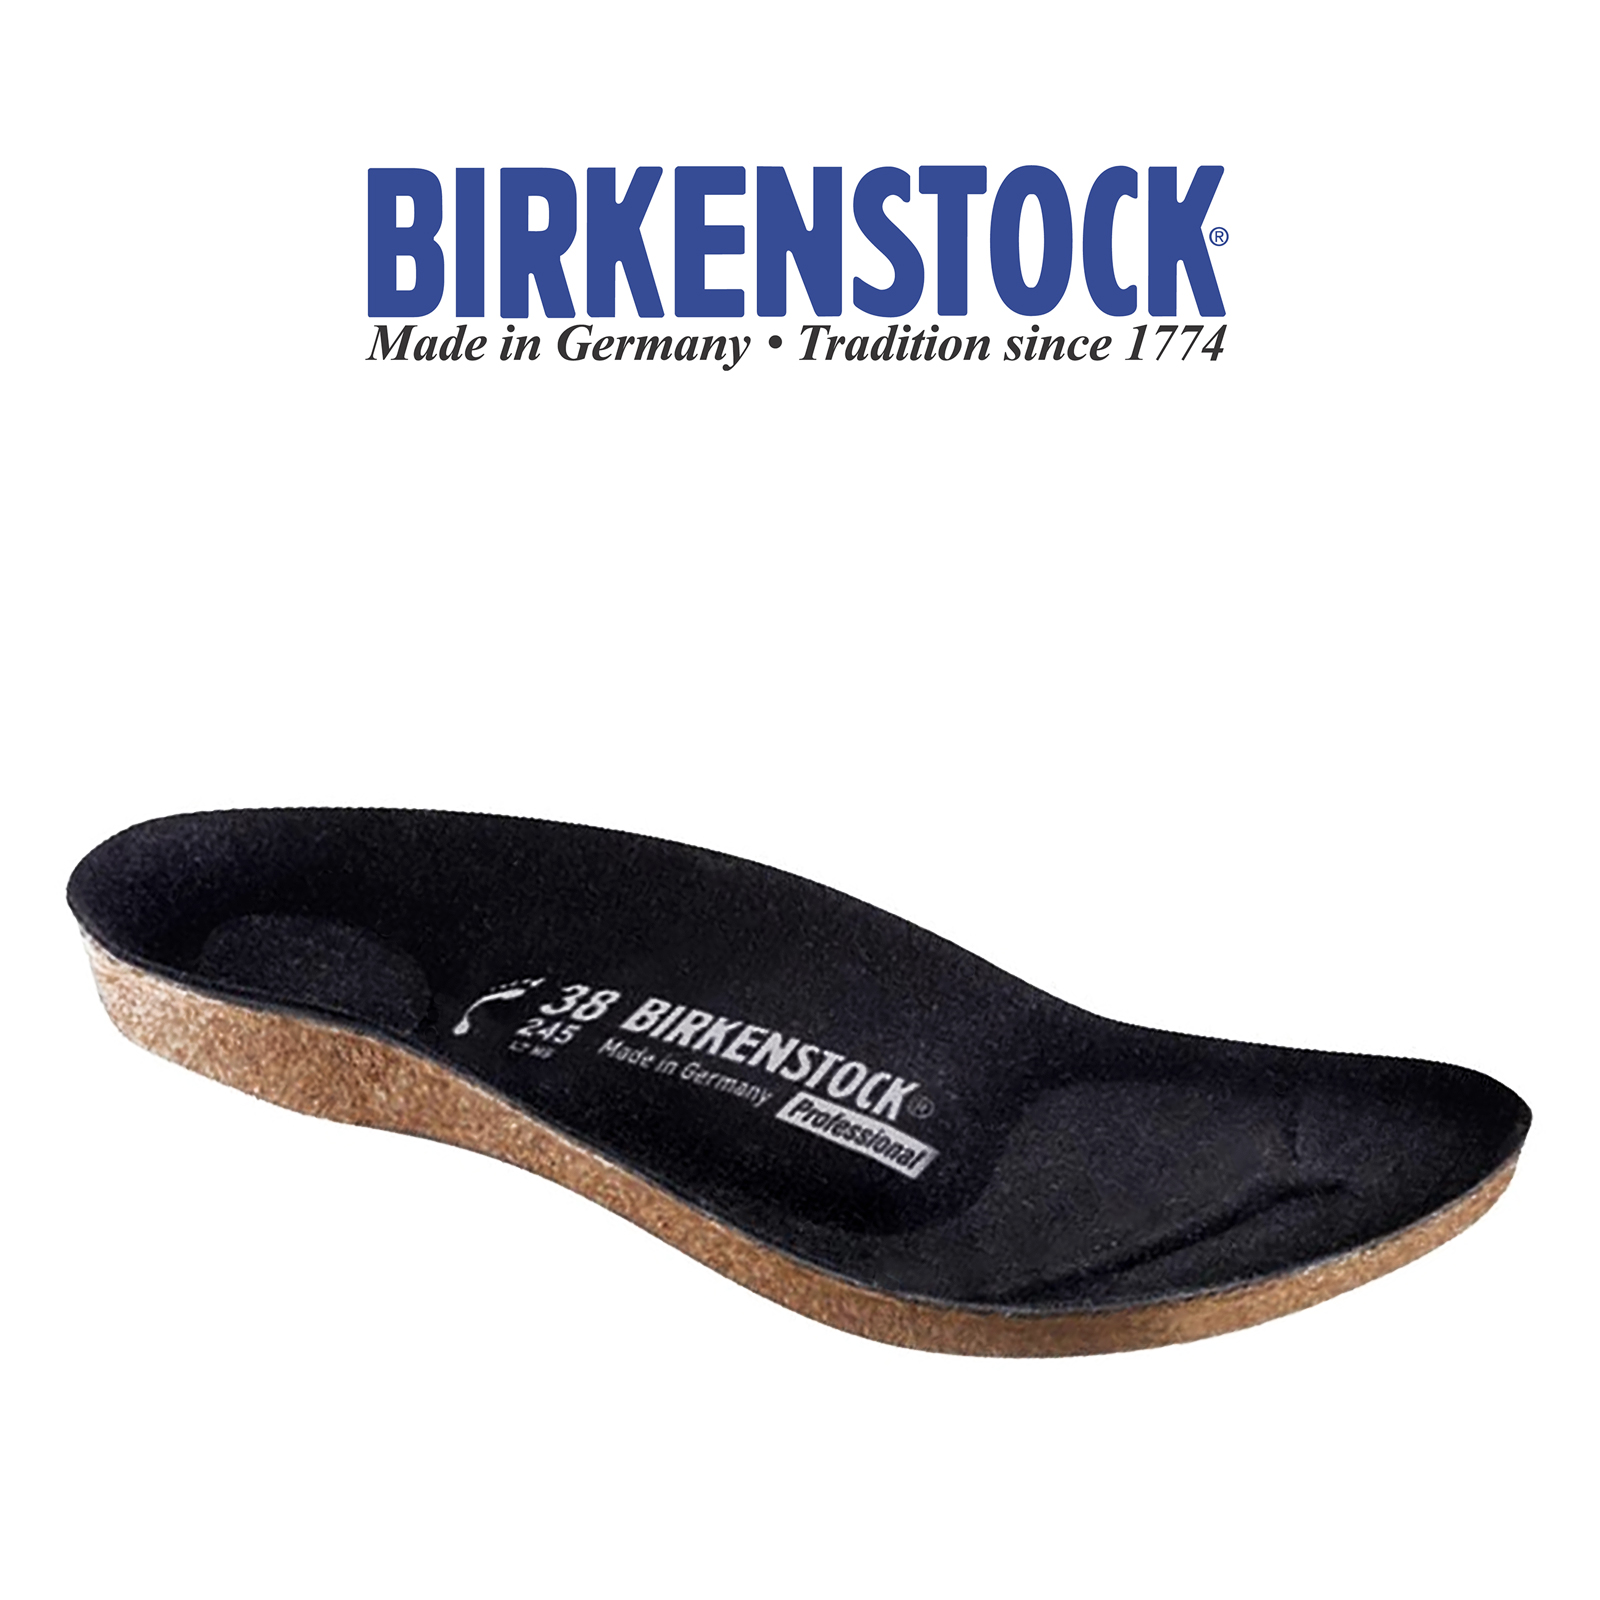 birkenstock footbed